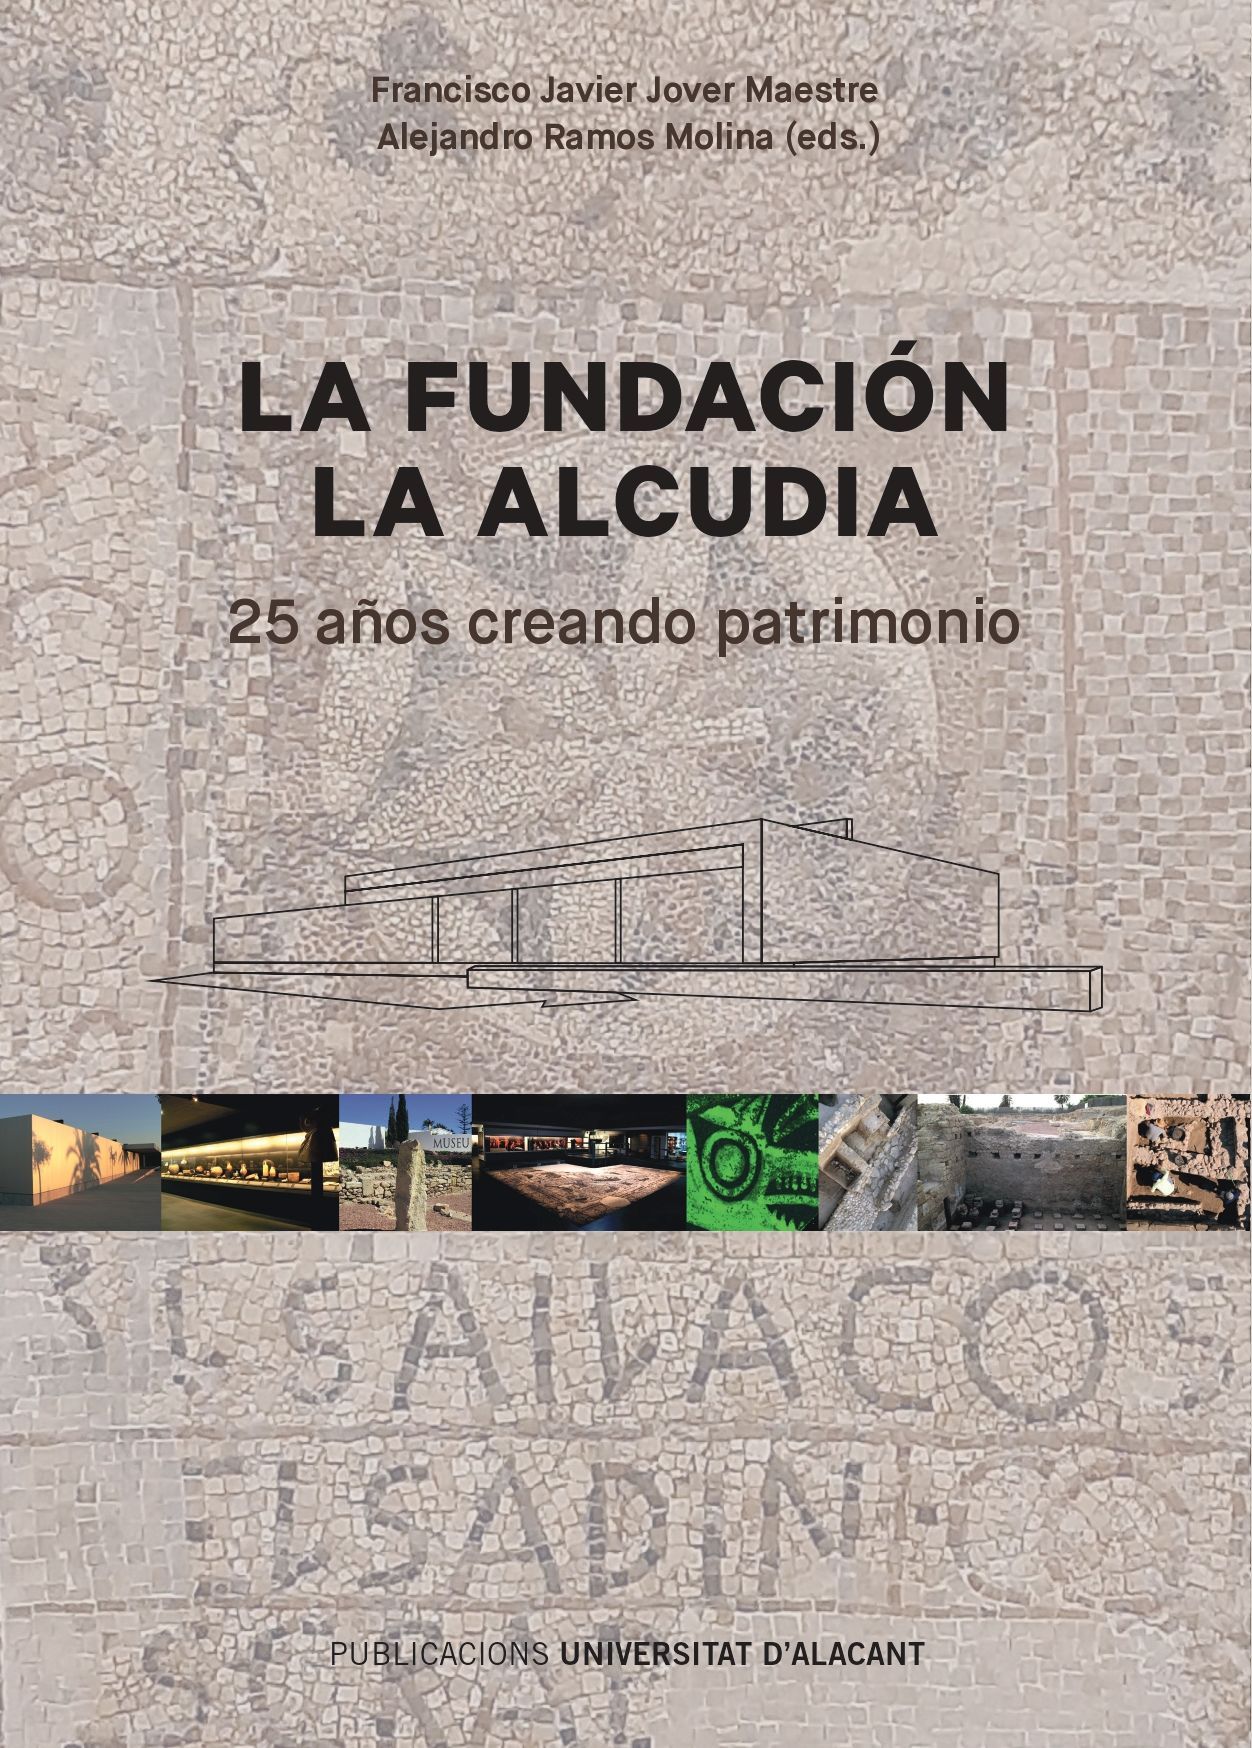 La fundaciÃ³n La Alcudia